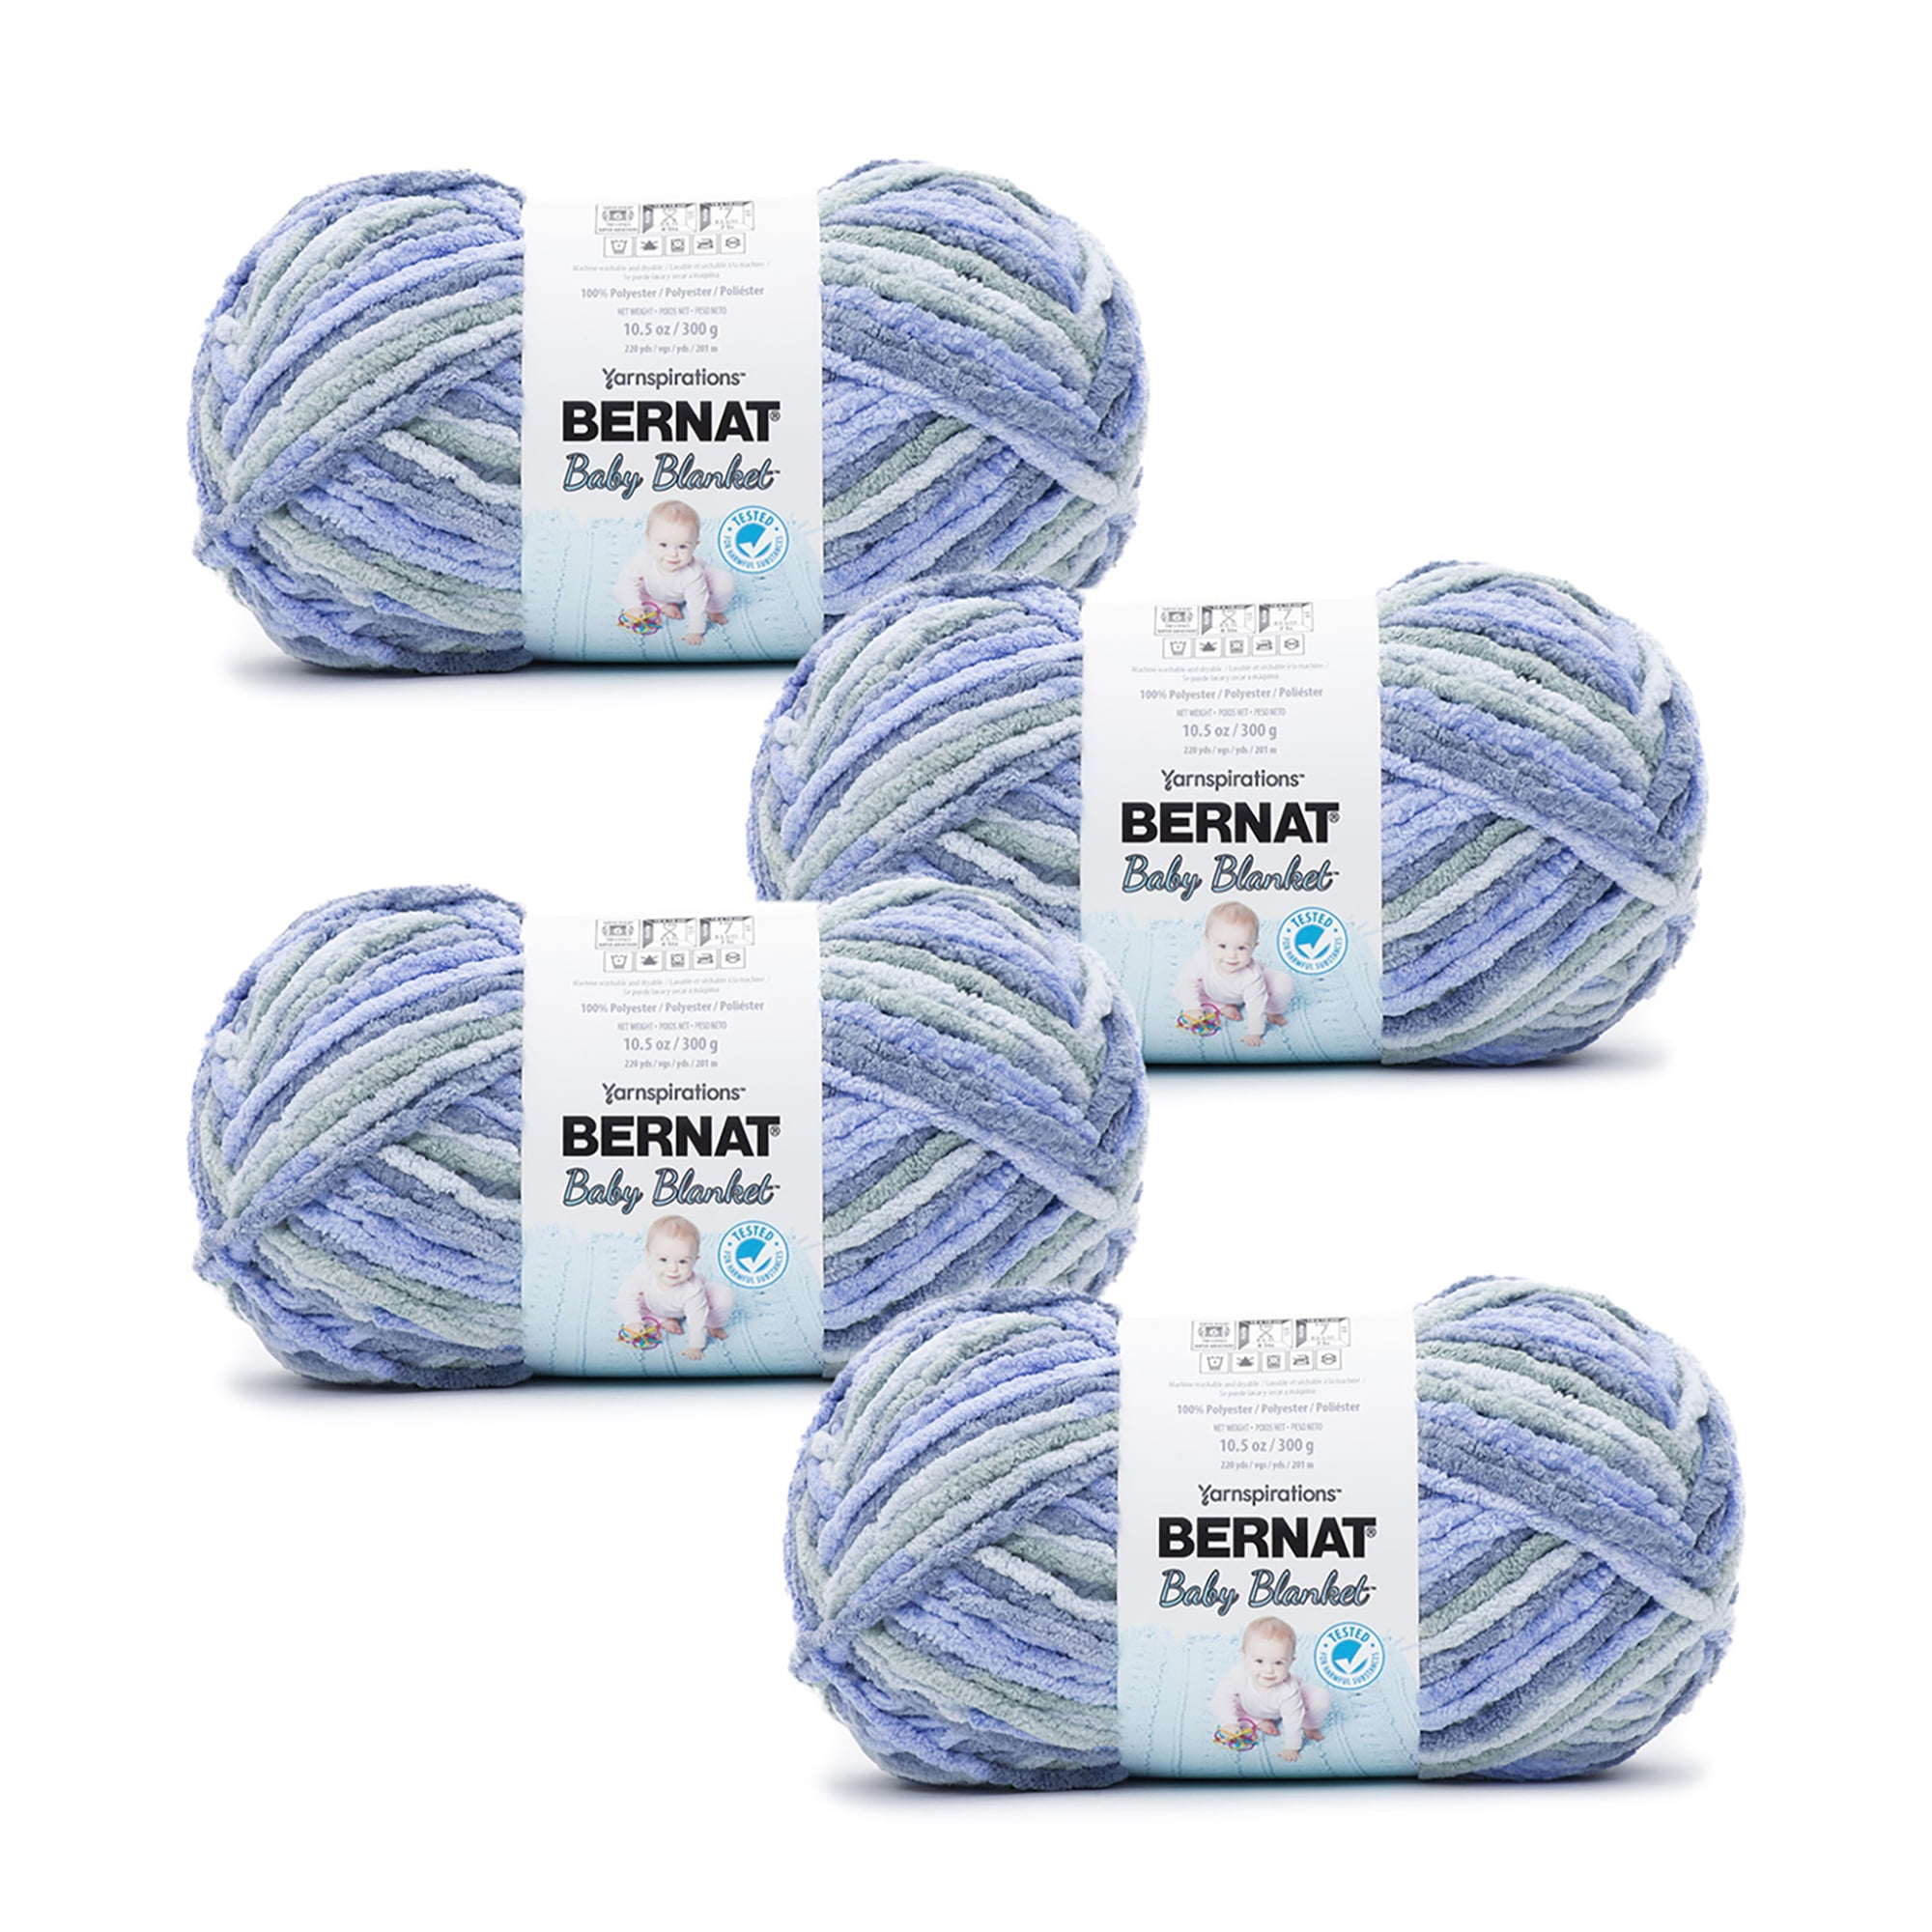 Bernat Baby Blanket Yarn Lot of 3 Skeins Baby Blue Green Super